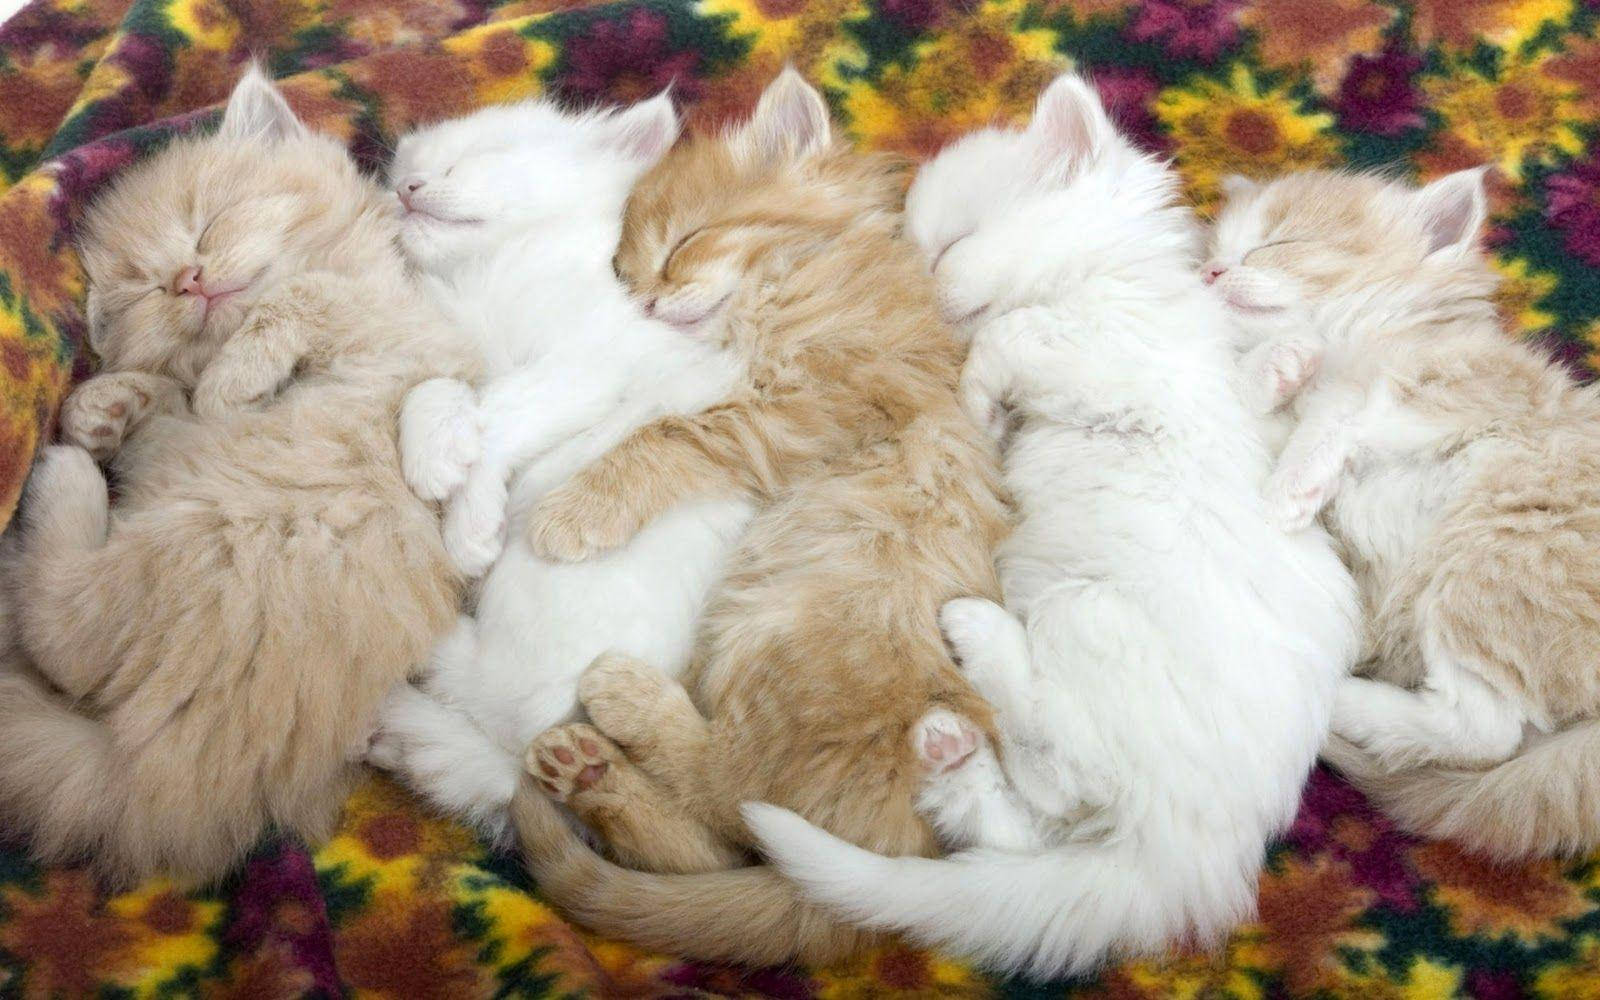 Sleeping Kittens Pile Cuteness Overload.jpg Wallpaper